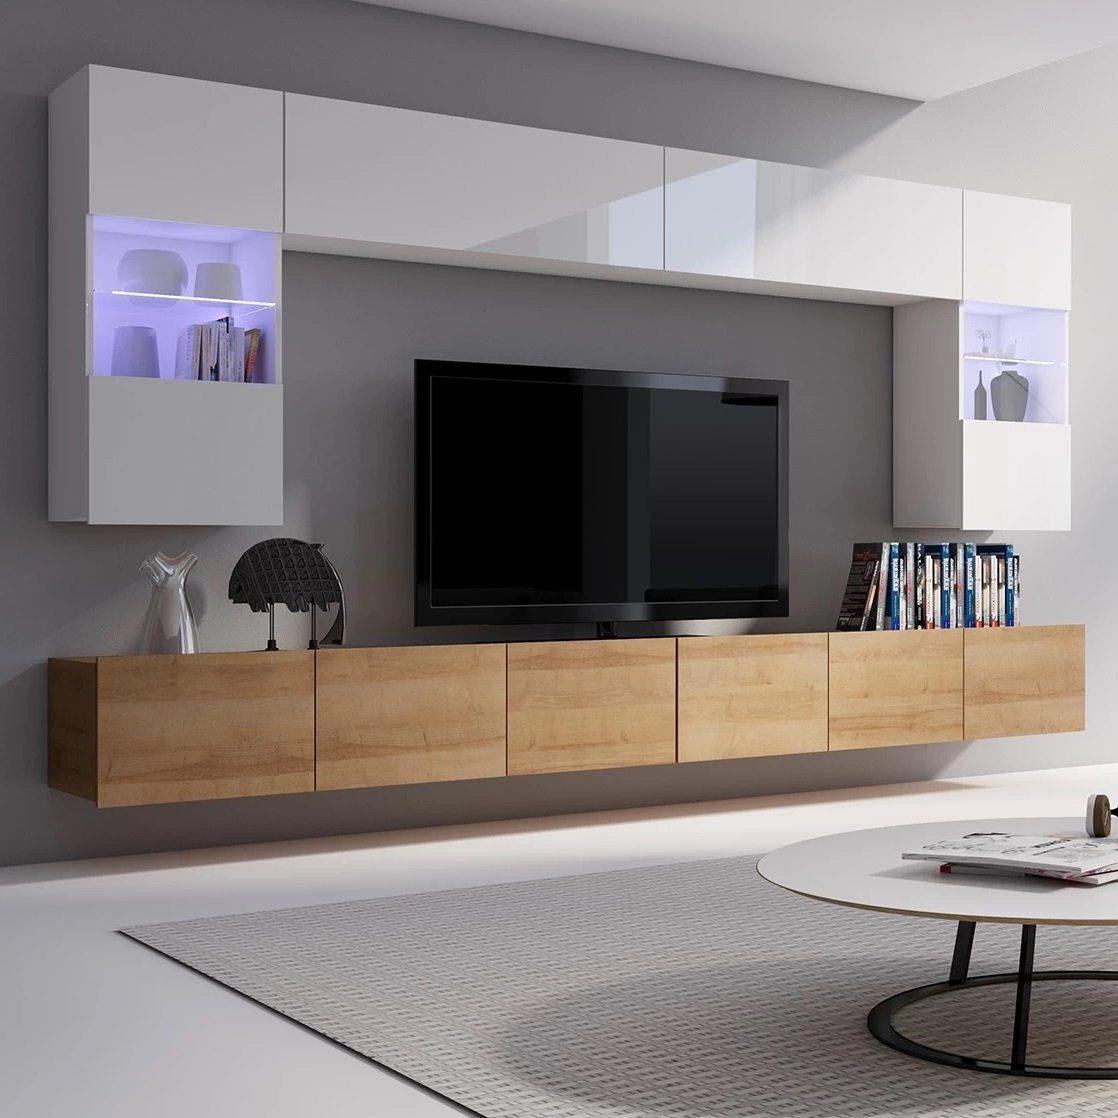 Furnix TV-Wand PUNE 1 Mediawand Möbelwand Wohnwand 6-teilig Farbauswahl, geräumig, 300 cm breit Weiß Glanz/Eiche-Gold